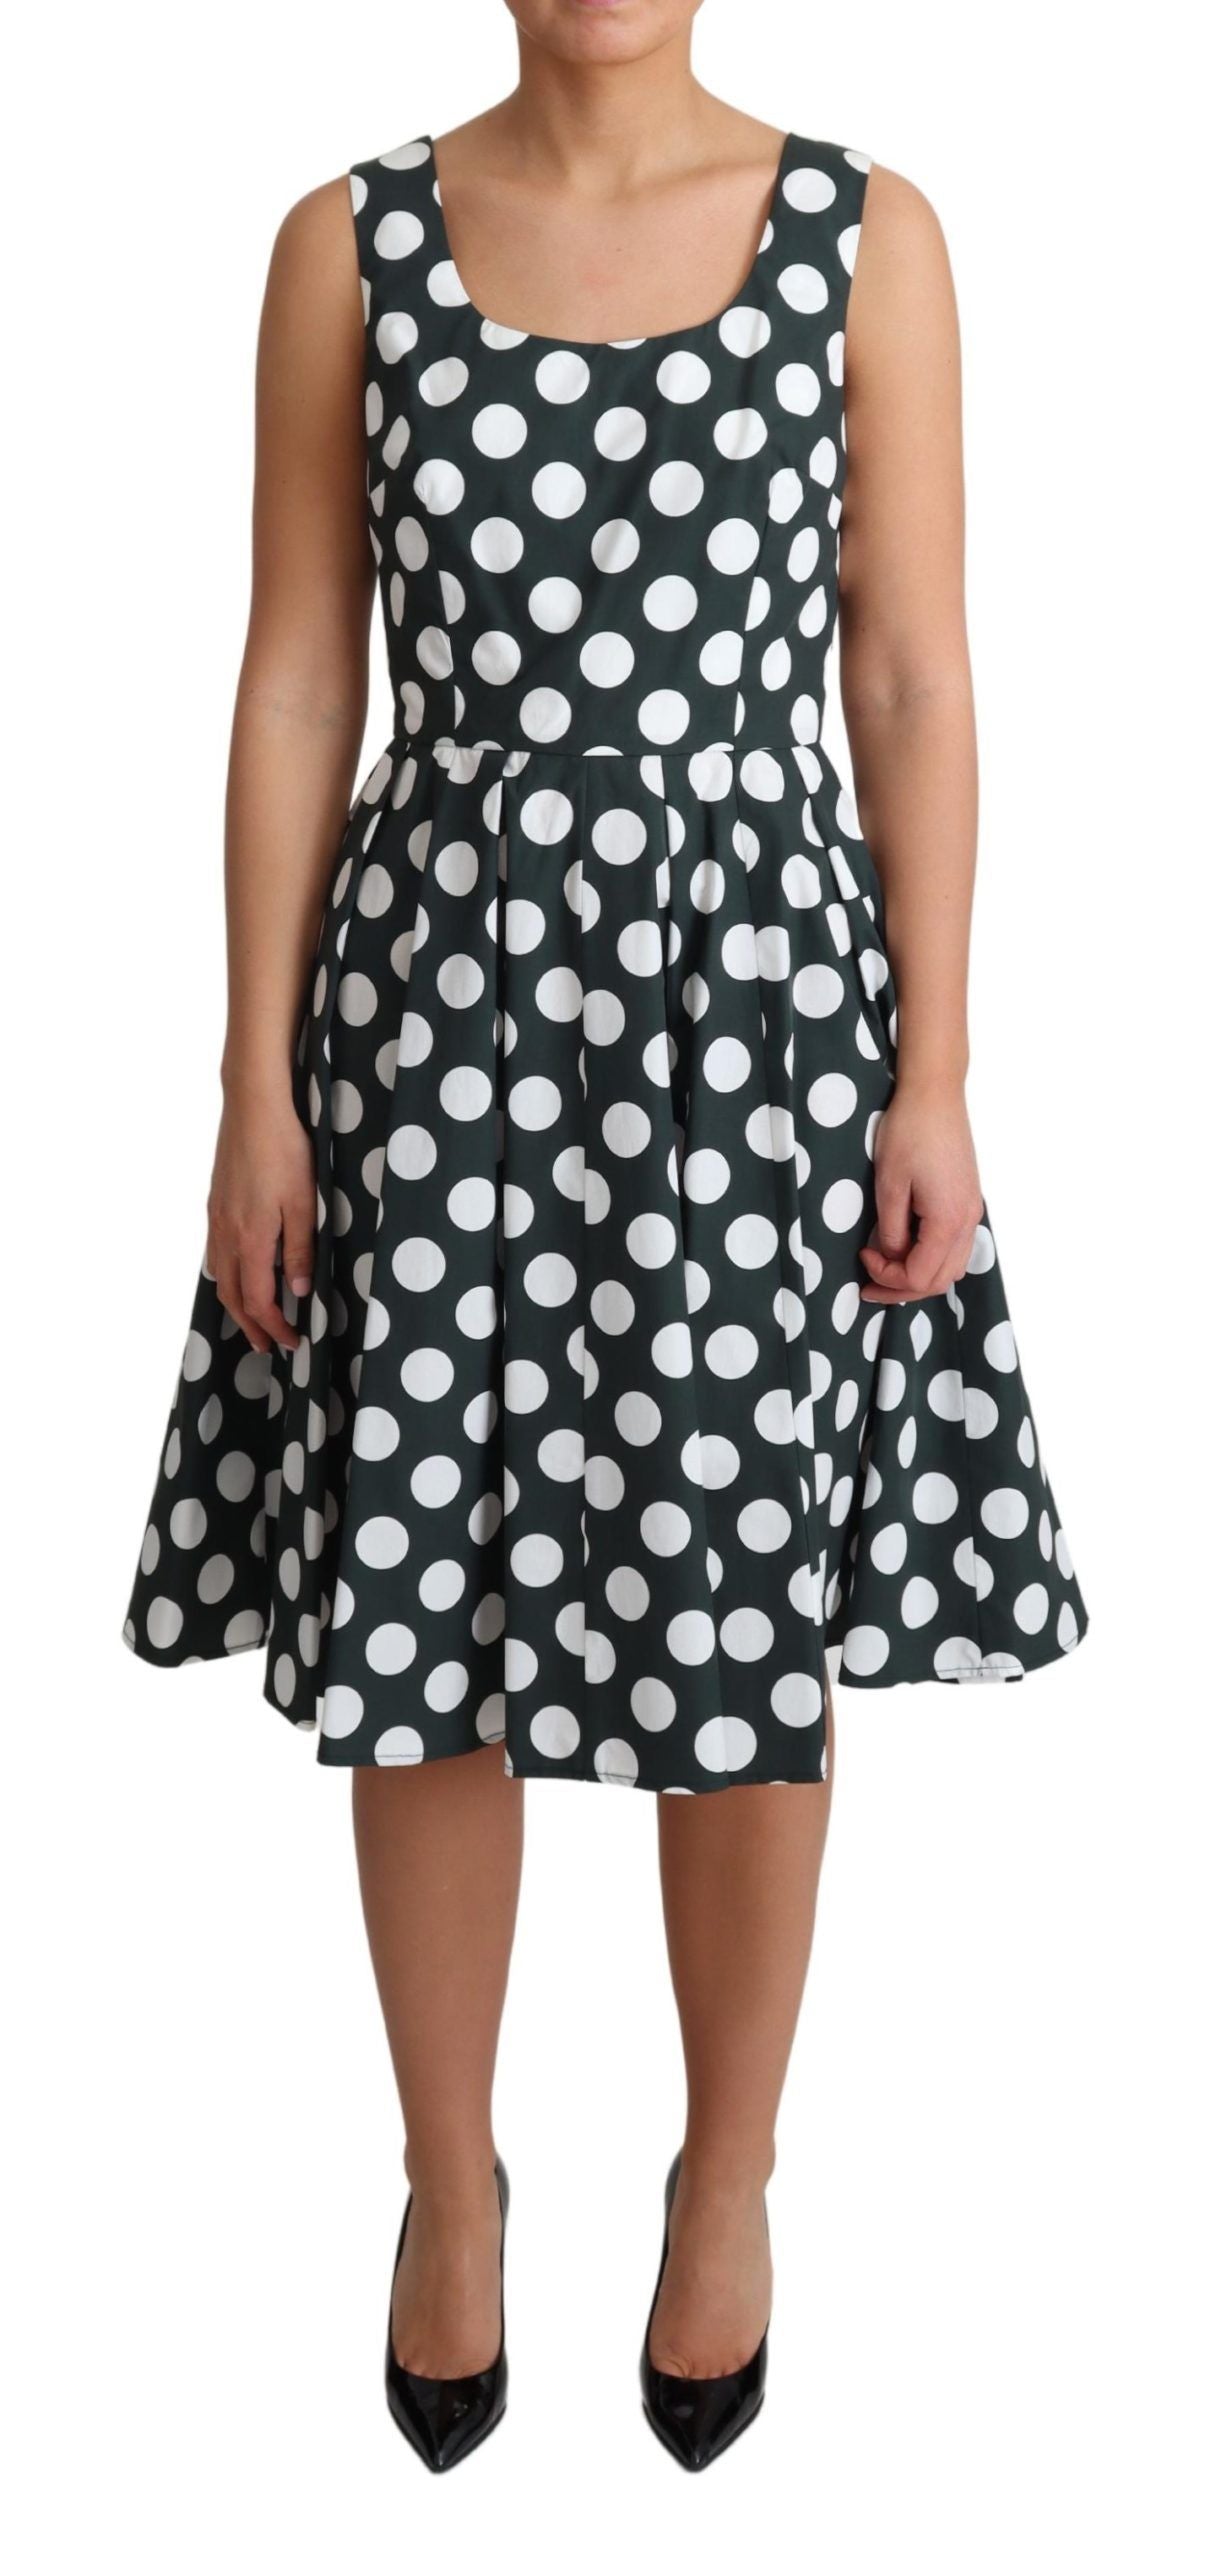 Chic Polka Dot A-line Sleeveless Dress